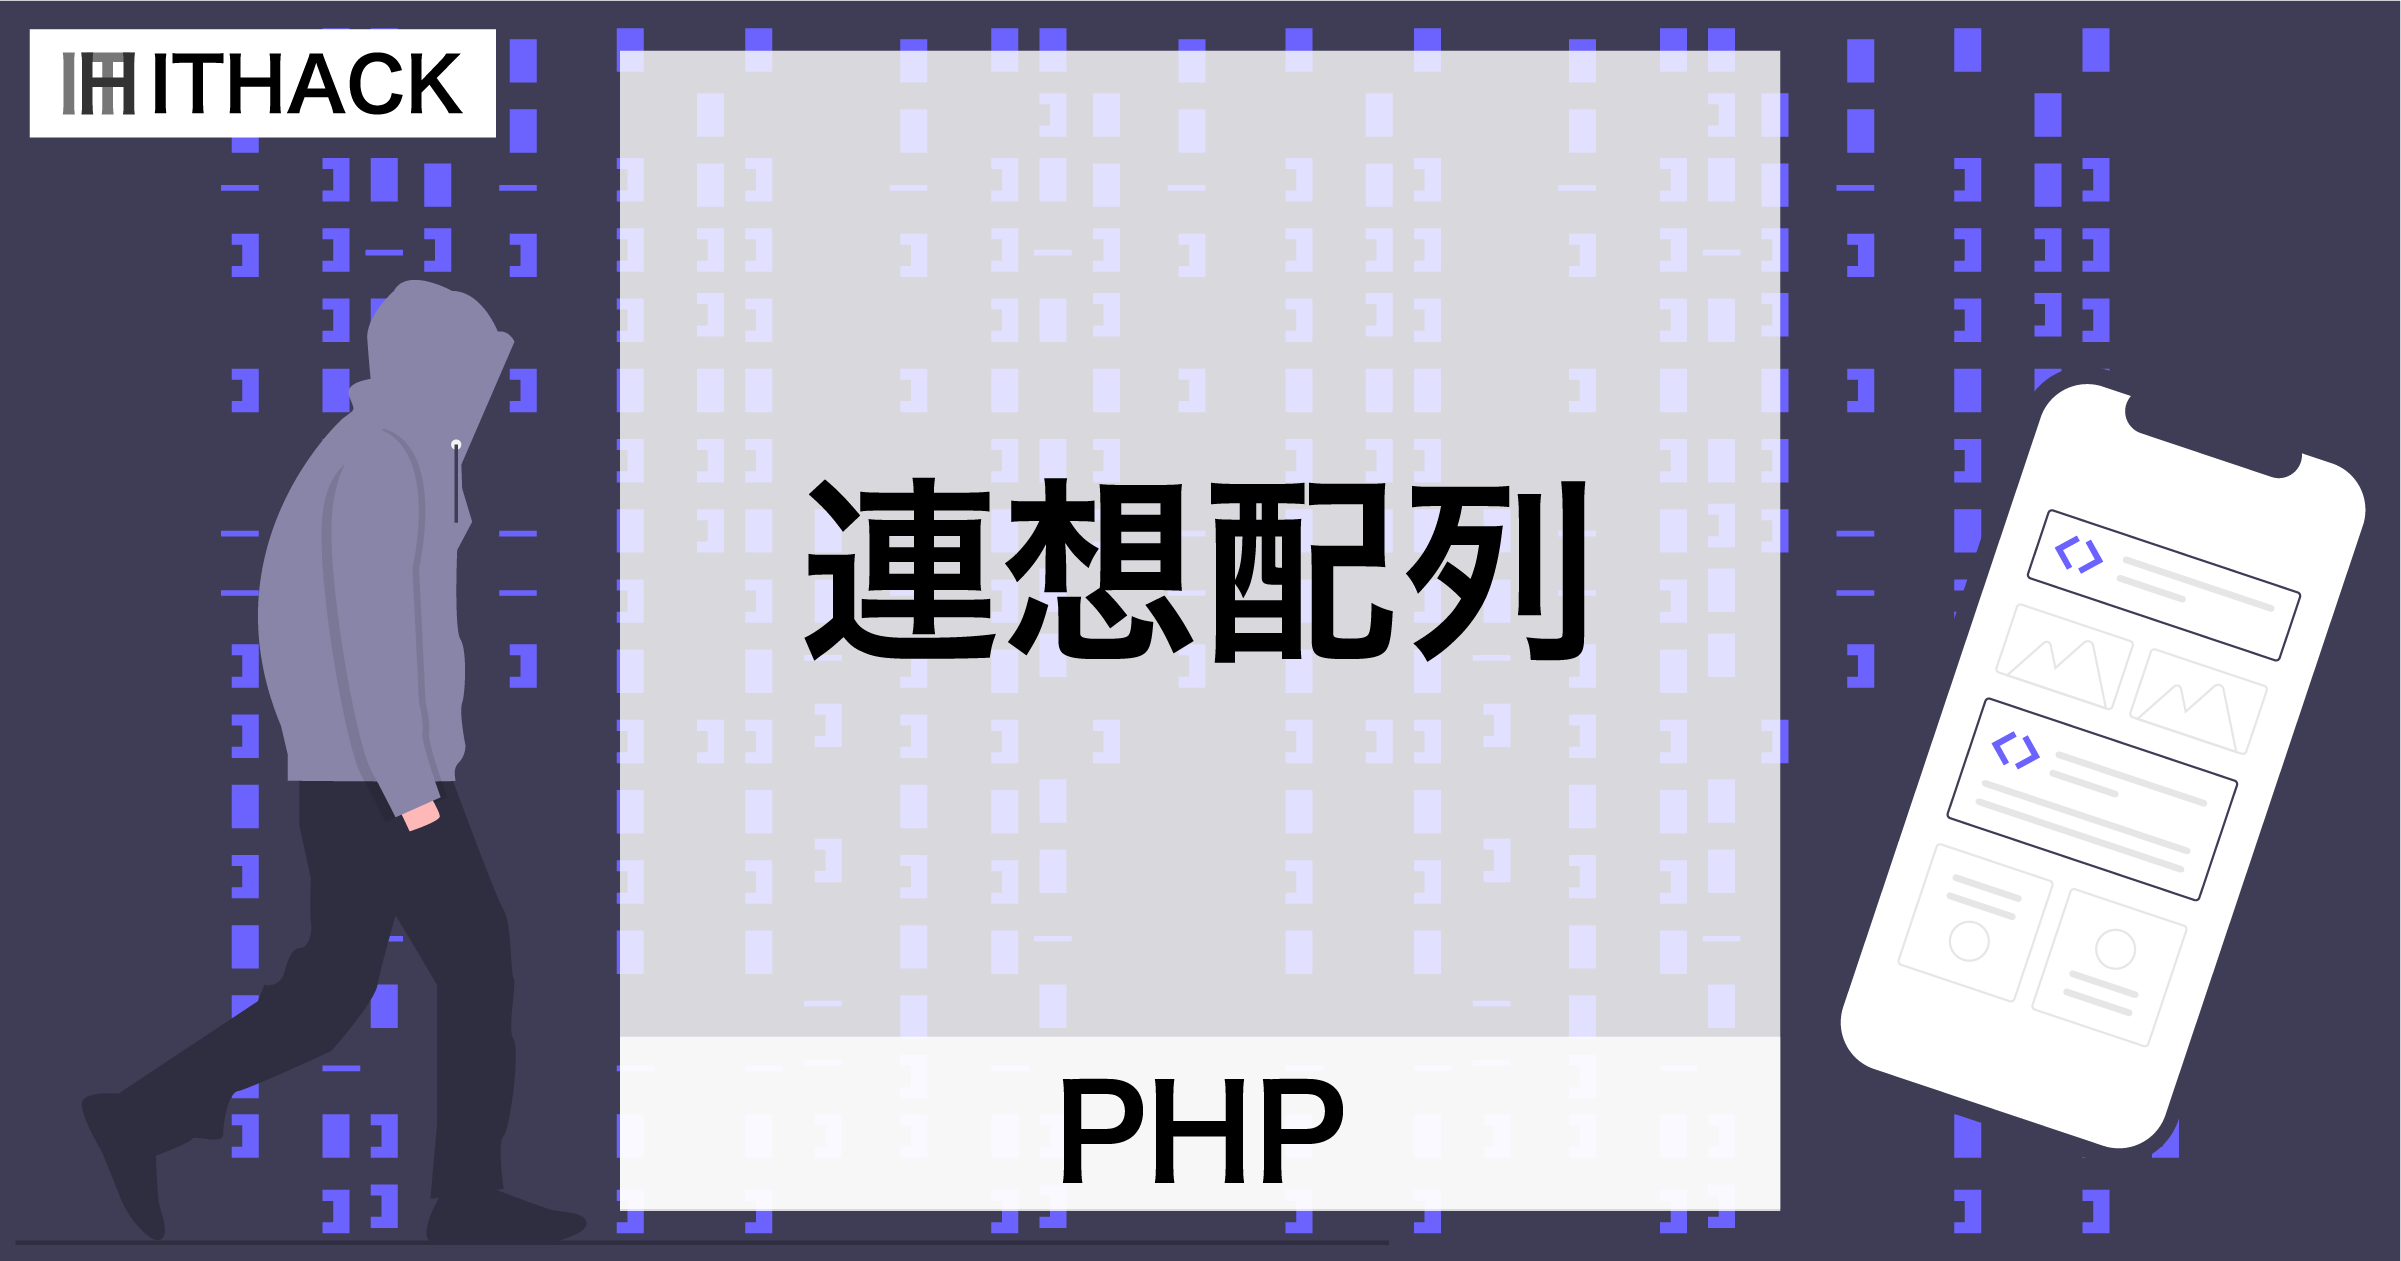 【PHP】連想配列 - キーが文字列の配列